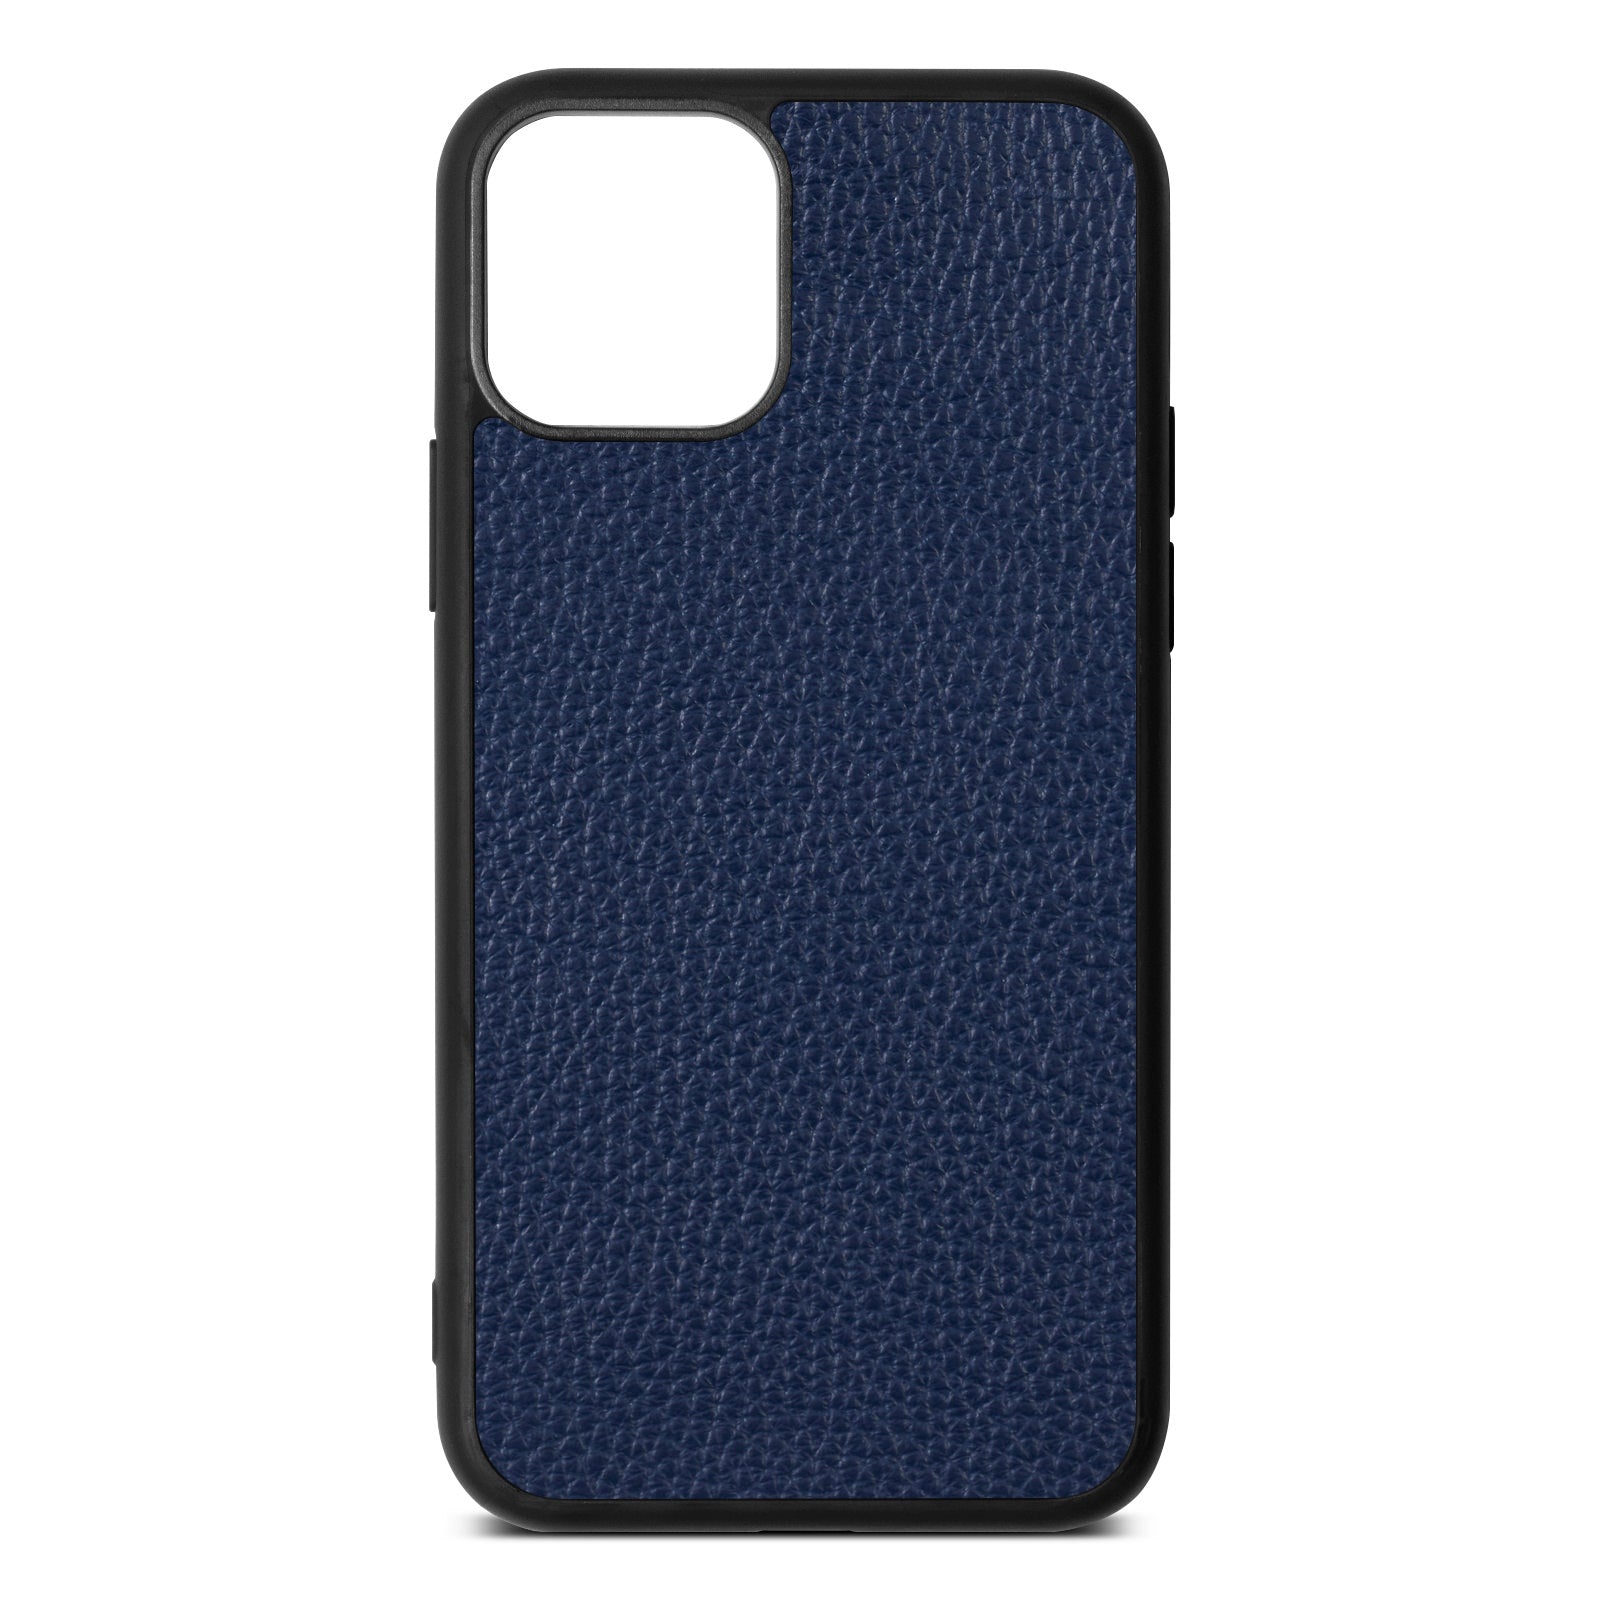 Blank iPhone 11 Navy Blue Pebble Grain Leather Case